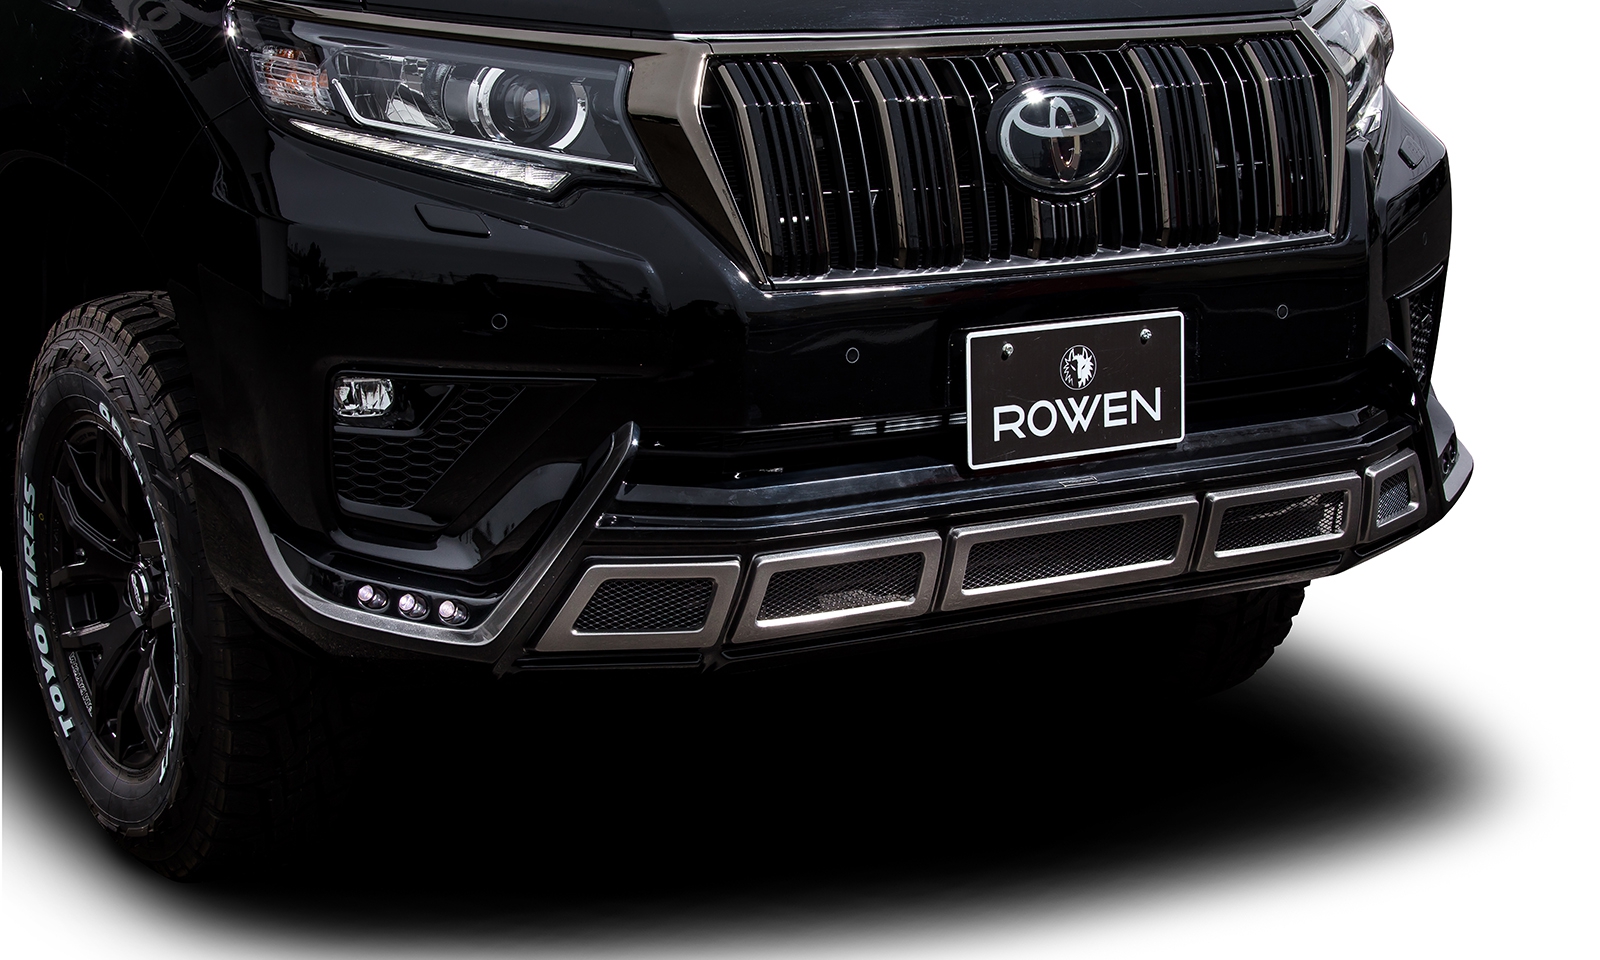 Check our price and buy Rowen body kit for Toyota Land Cruiser Prado